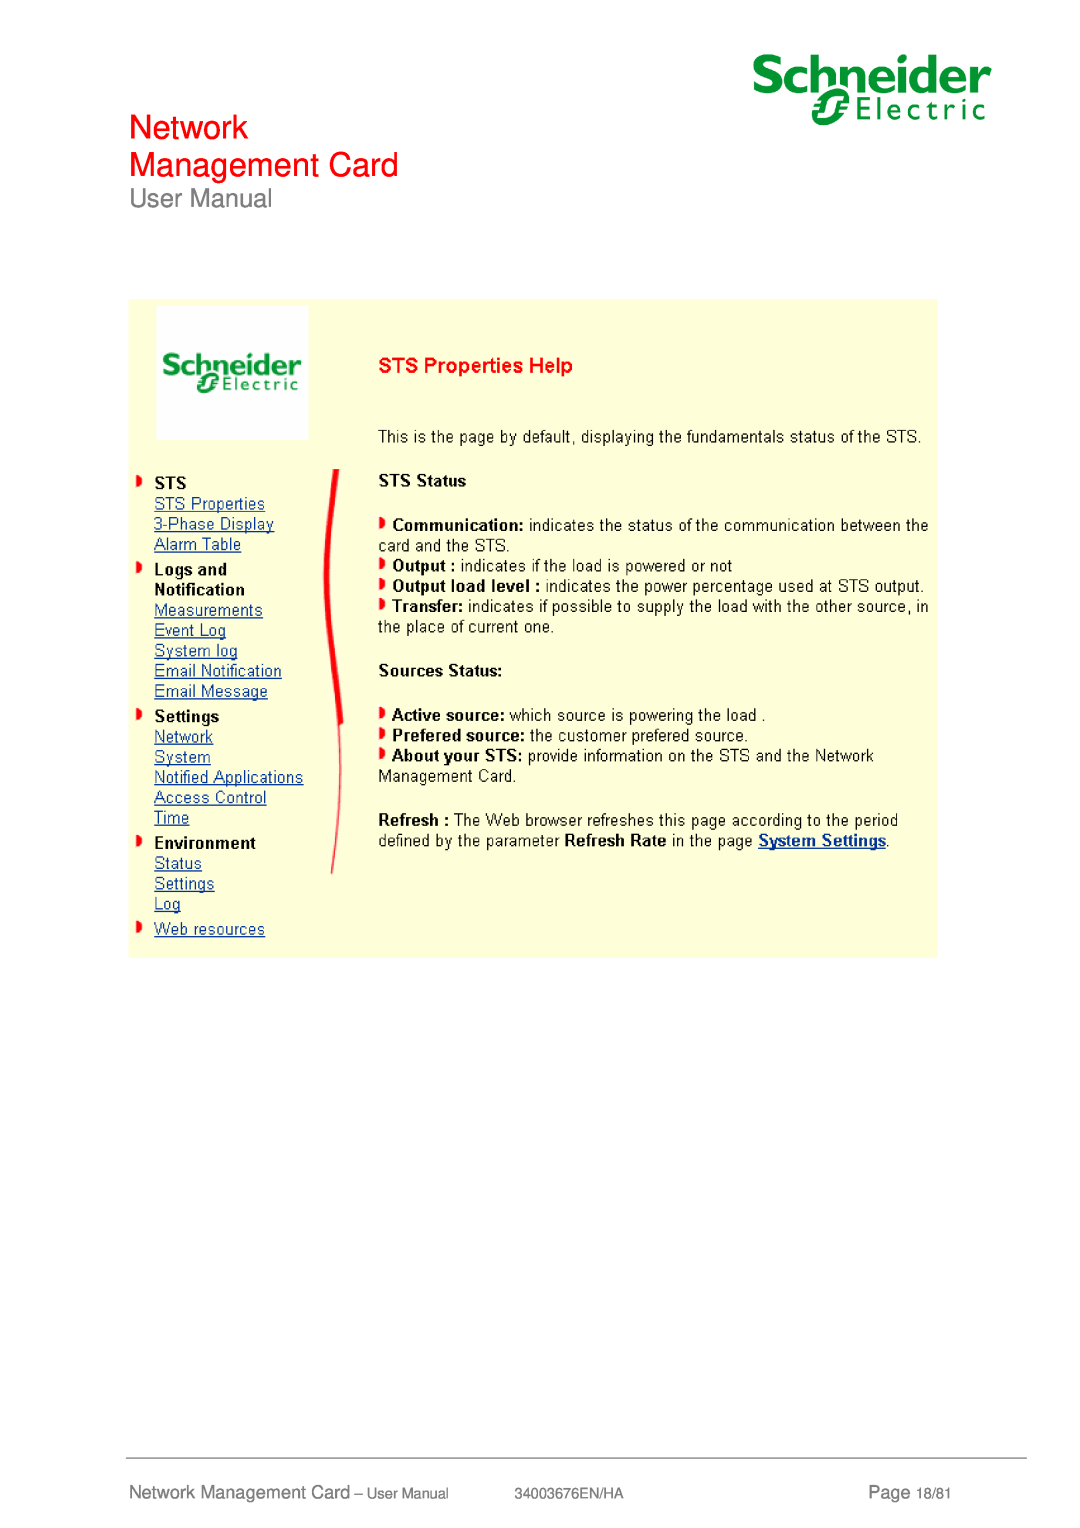 Schneider Electric 66846, 66074 user manual Network Management Card - User Manual, Page 18/81, 34003676EN/HA 